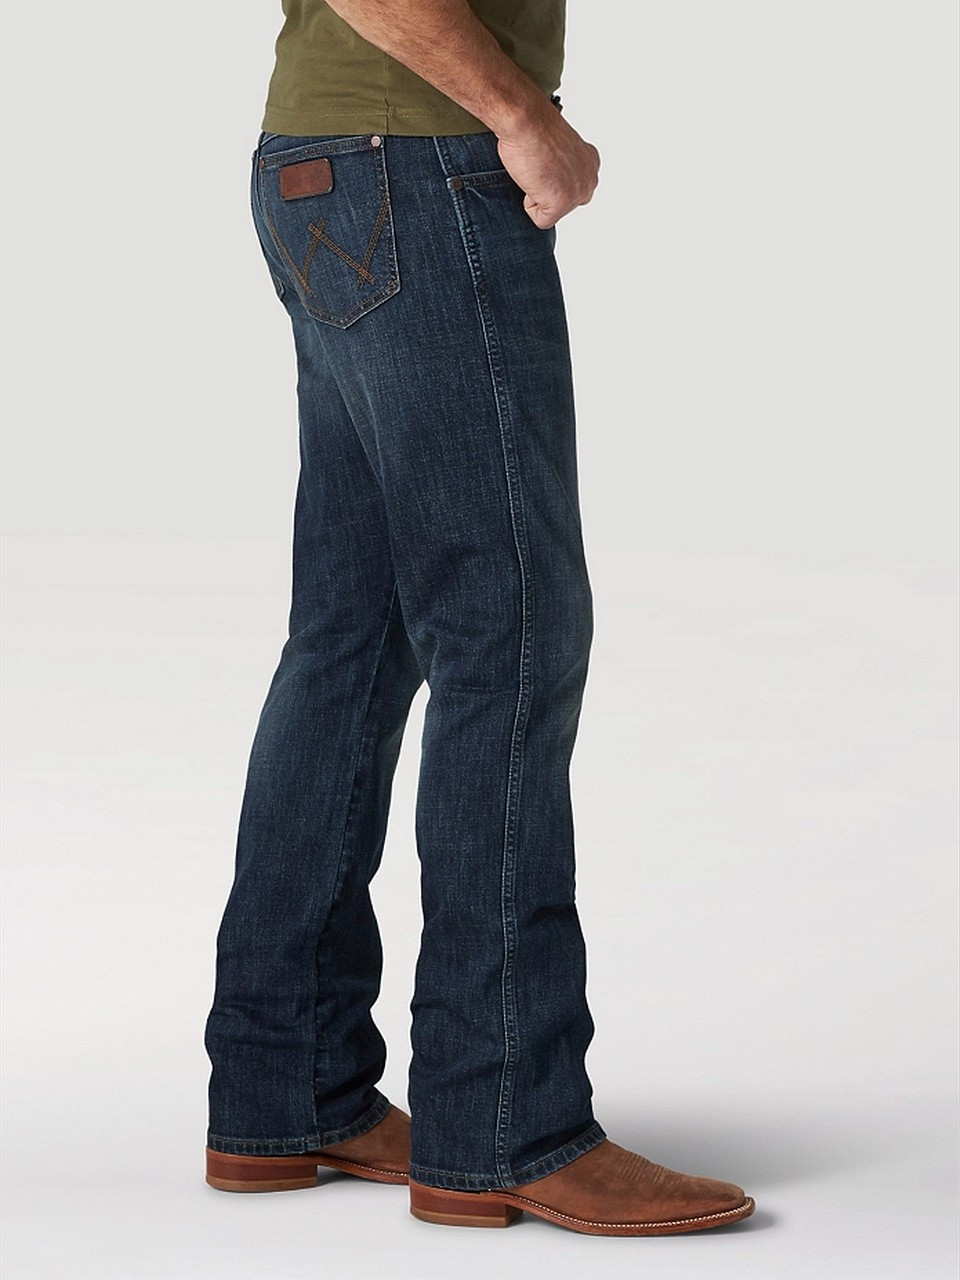 Wrangler Retro Men s Relaxed Fit Bootcut Jeans Barton Springs S 3 76855.1645572703